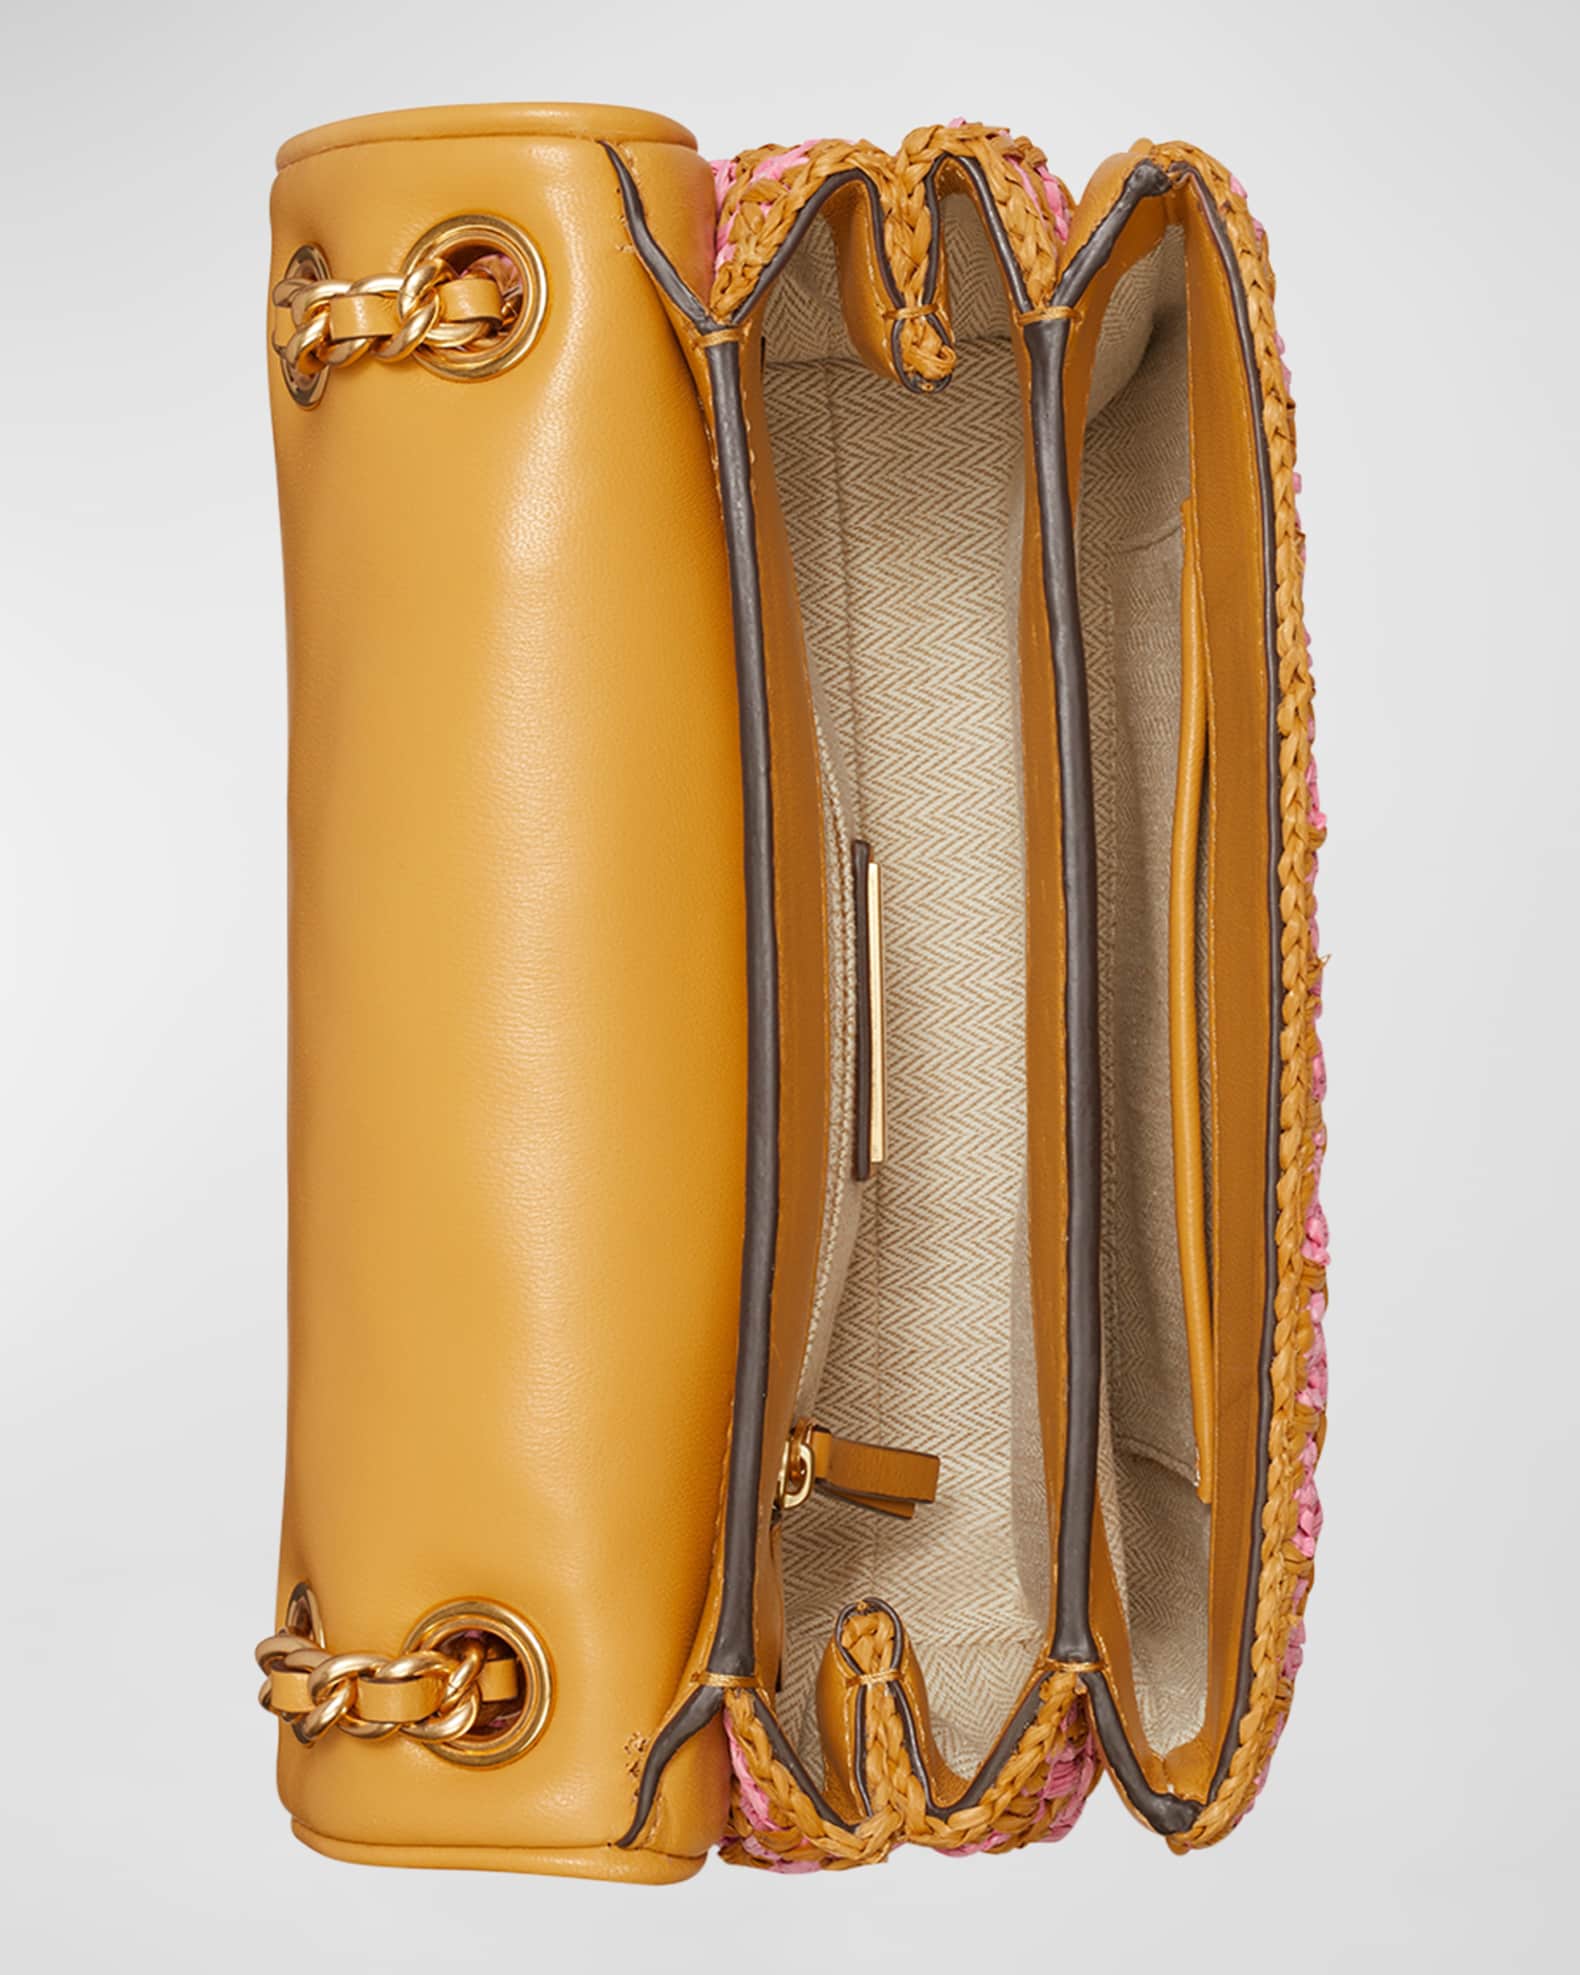 Handbags Tory Burch, Style code: 137301-001